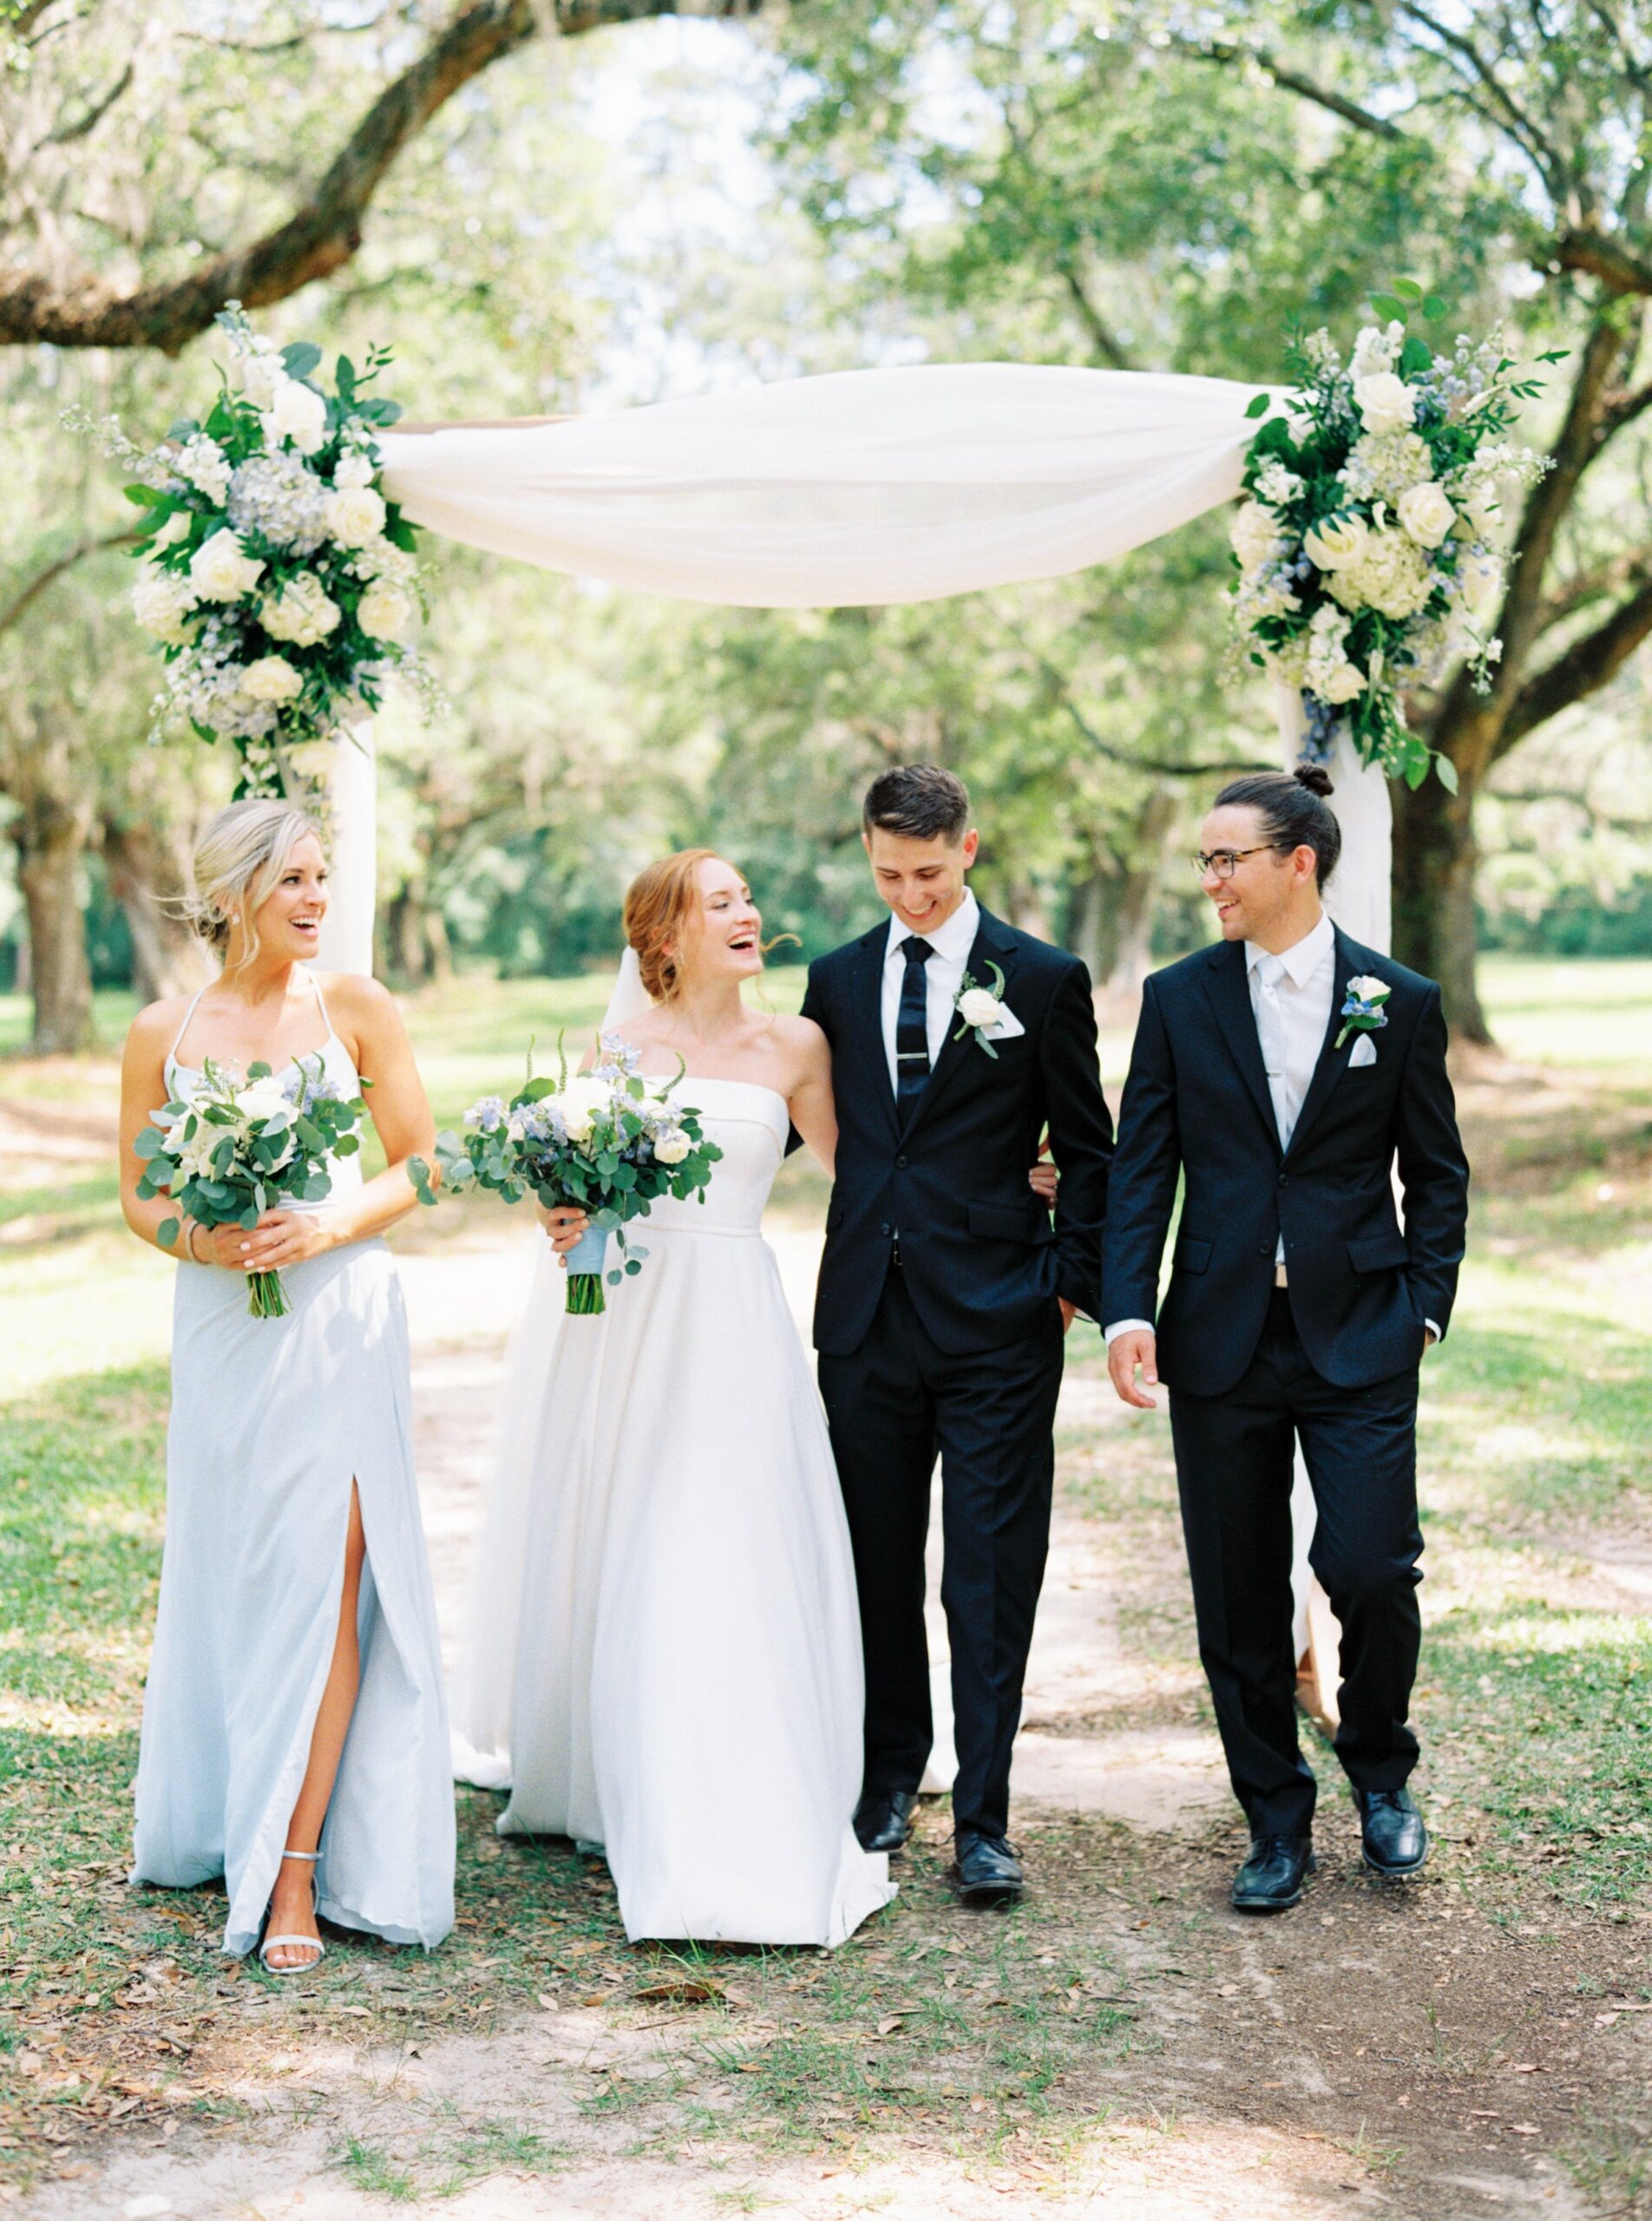 bridal party walks together under live oak trees at spring outdoor wedding.